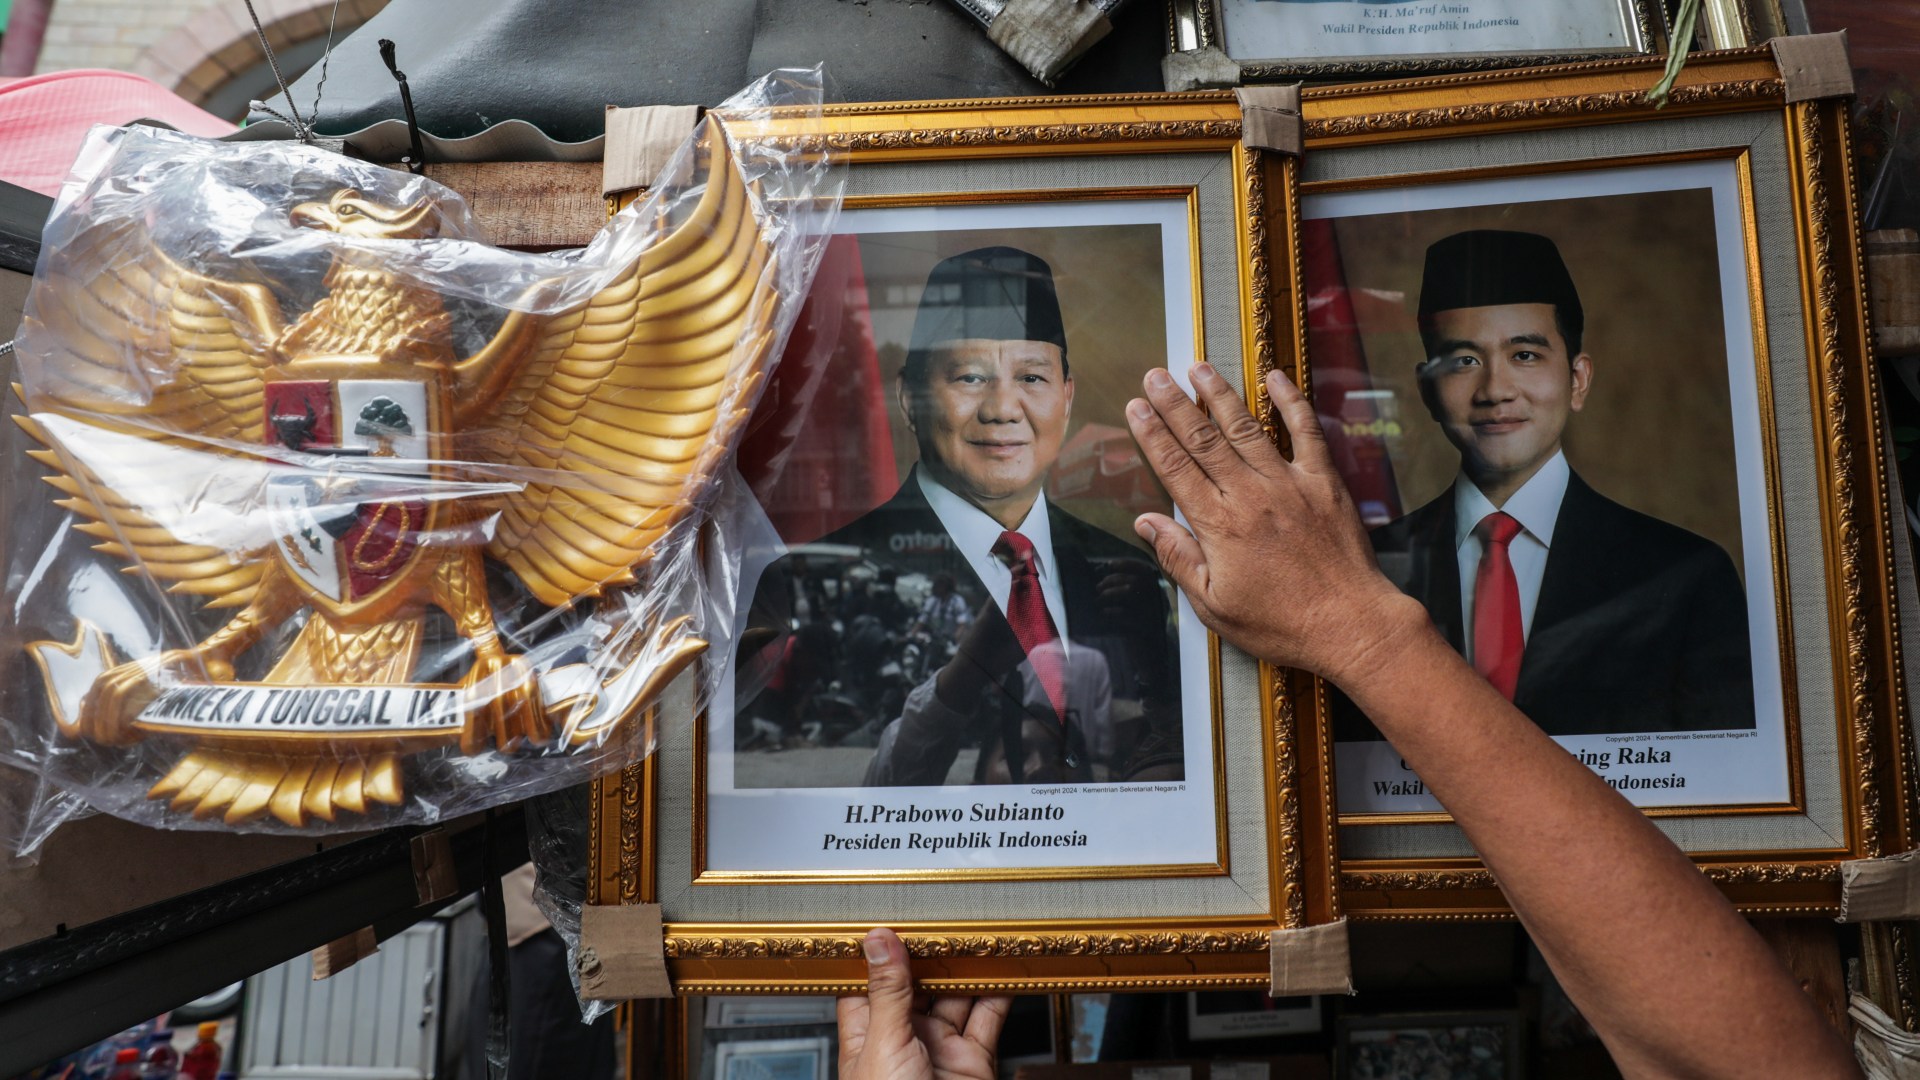  Kisi-Kisi Kriteria Menteri Keuangan Prabowo Idaman Para Investor